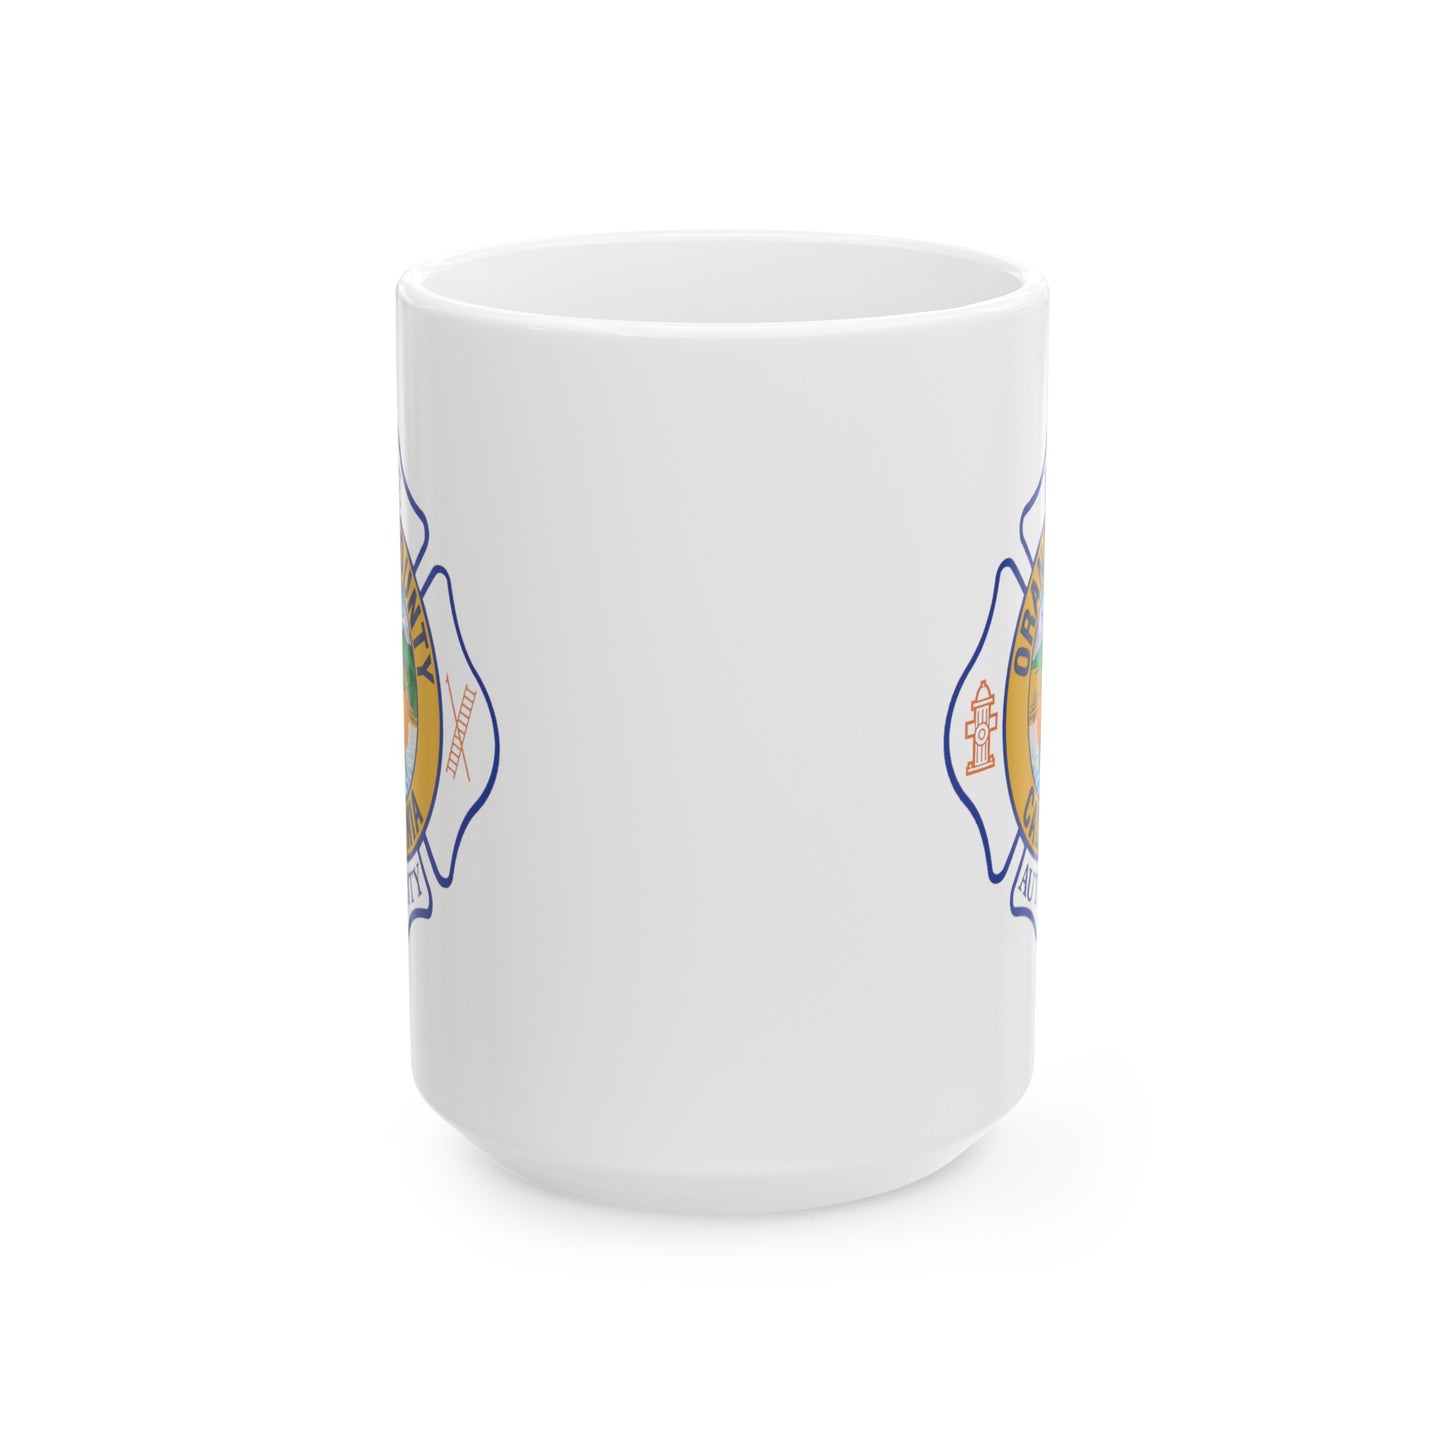 Orange County Fire Authority Coffee Mug - Double Sided White Ceramic 15oz by The GlassyLass